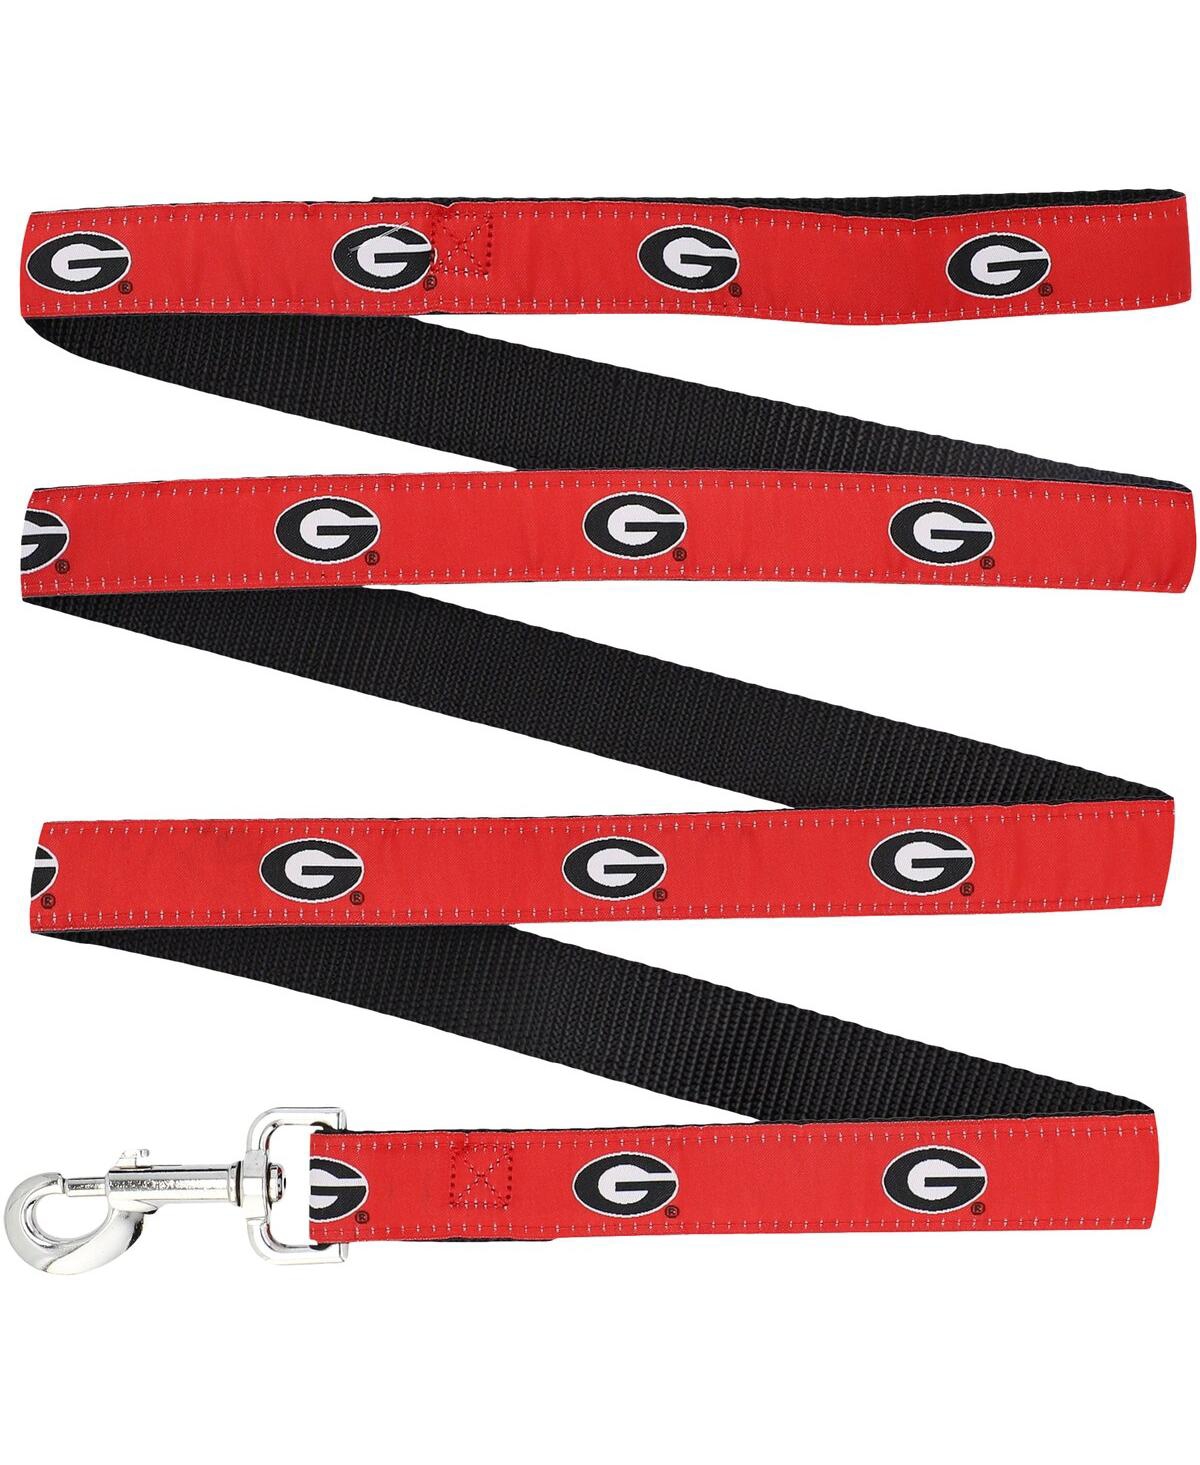 Georgia Bulldogs 6' Regular Dog Leash - Red